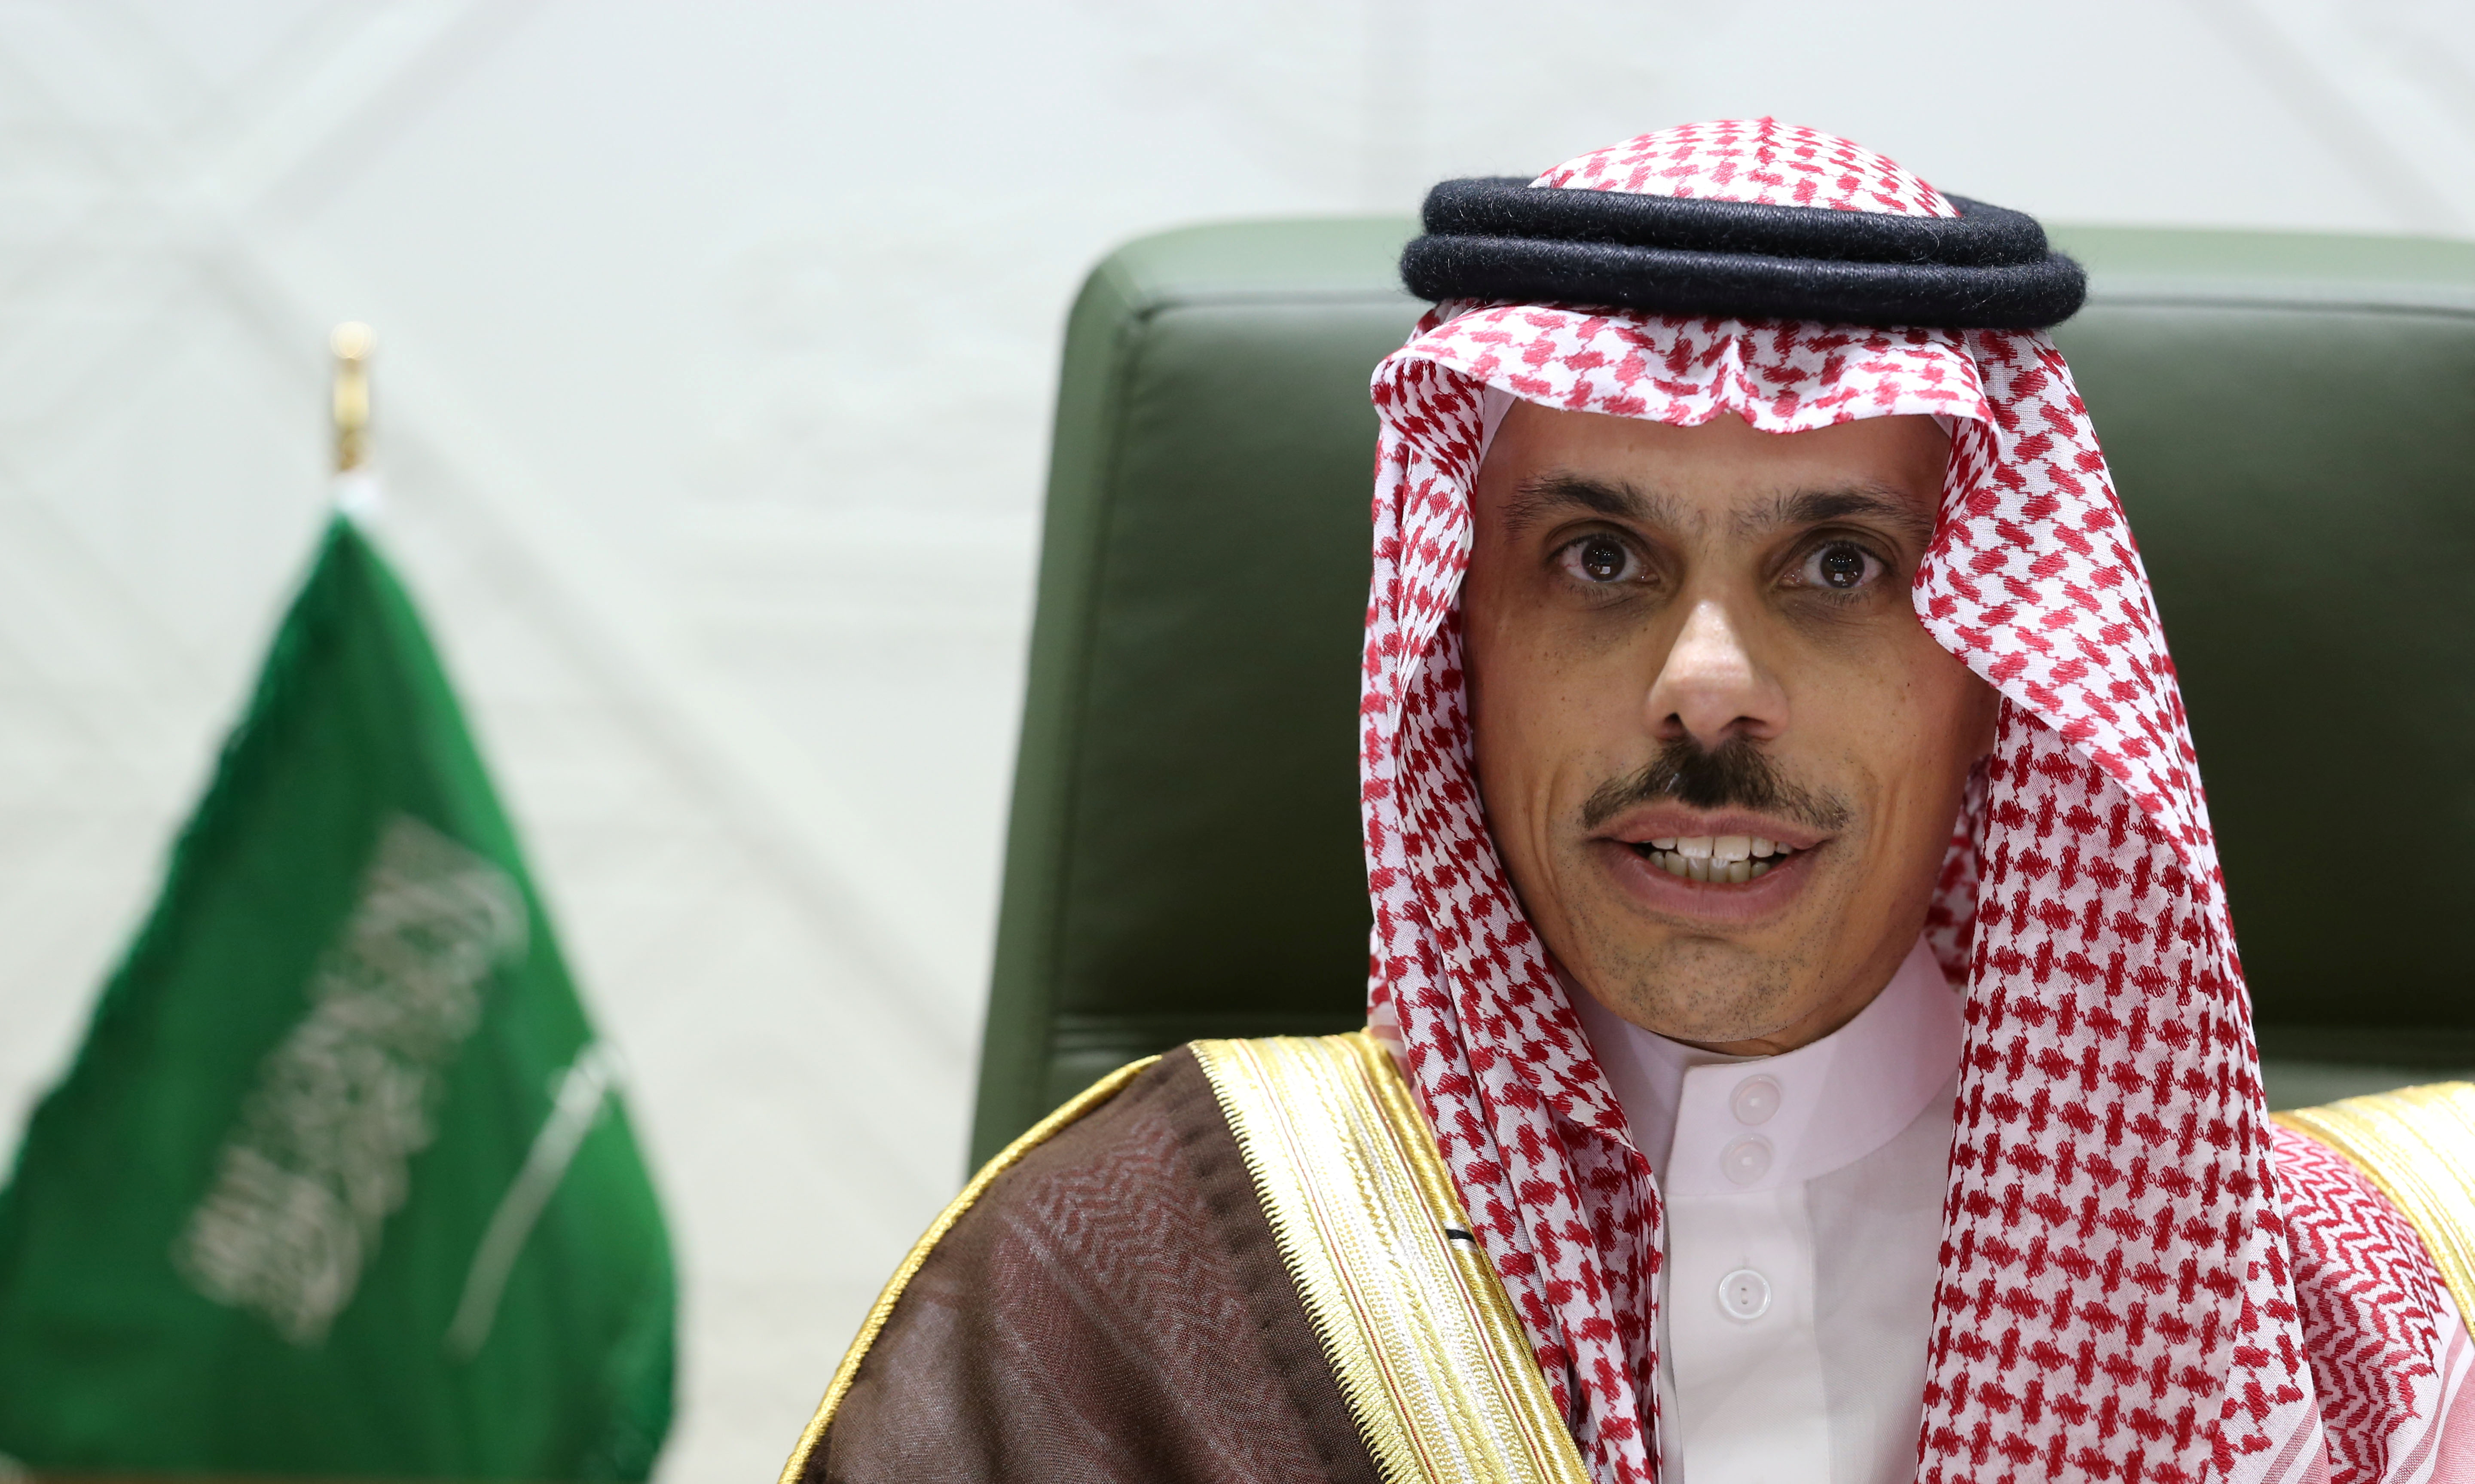 Saudi Arabia's Foreign Minister Prince Faisal bin Farhan Al Saud speaks during a news conference in Riyadh